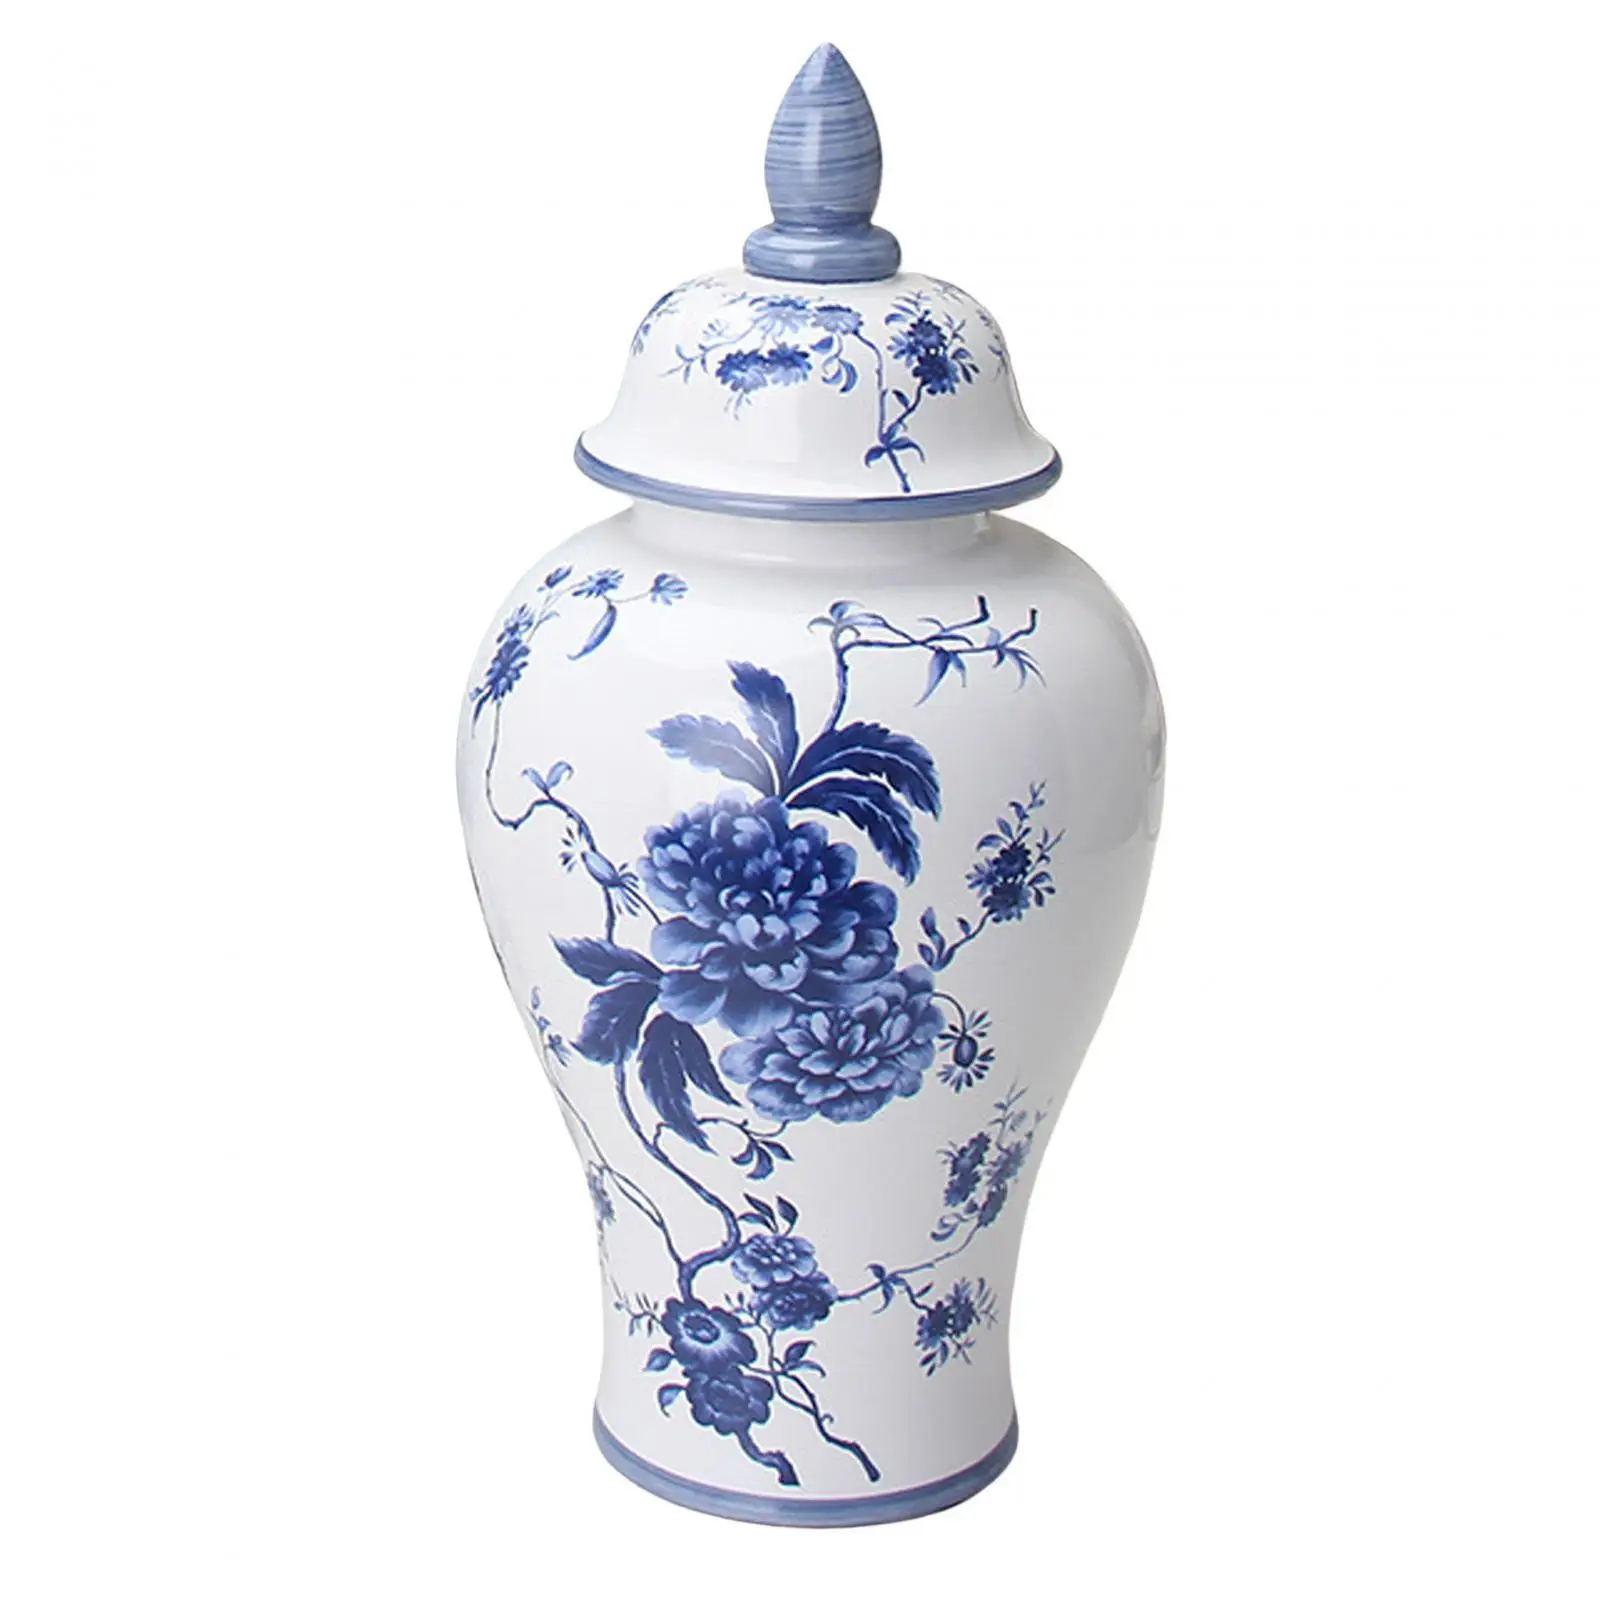 Blue and White Ceramic Glazed Temple Jar Vase Home Decoration Oriental Style